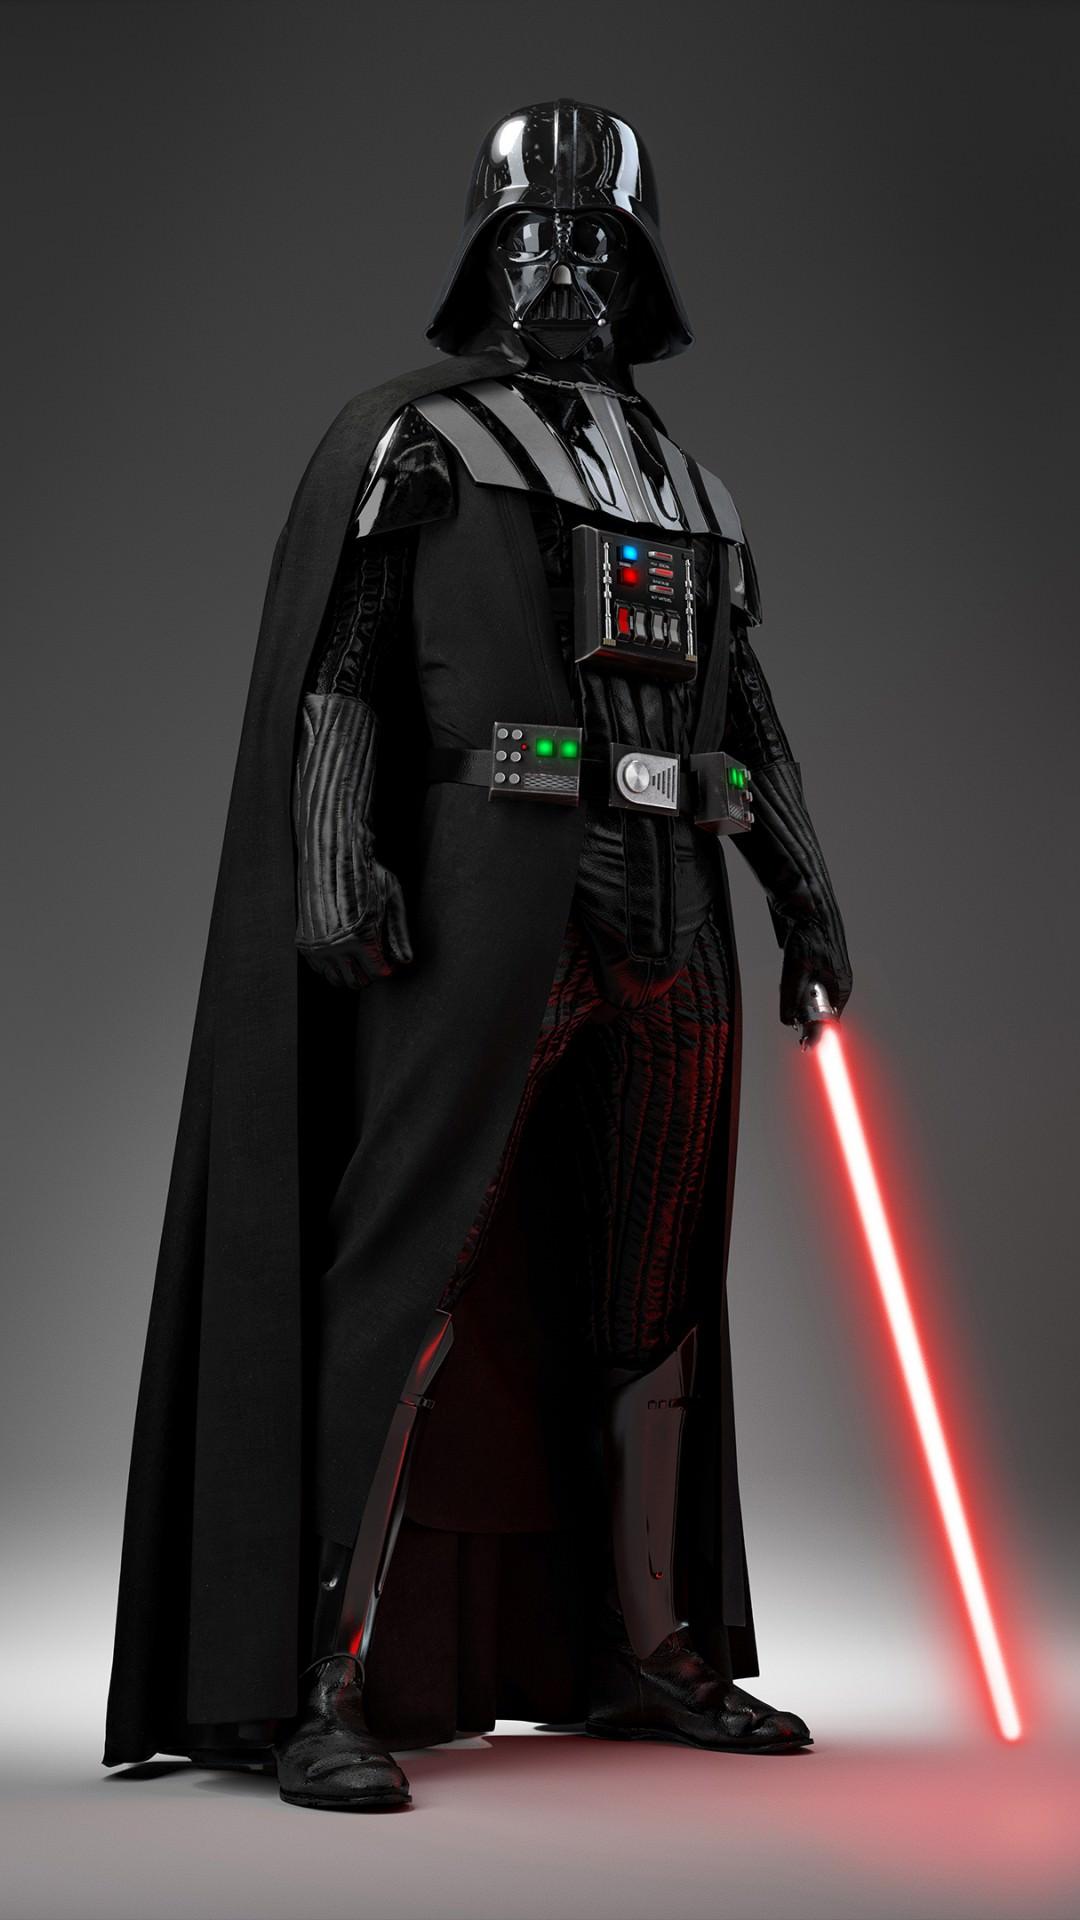 Darth Vader Star Wars Battlefront iPhone 6 Plus